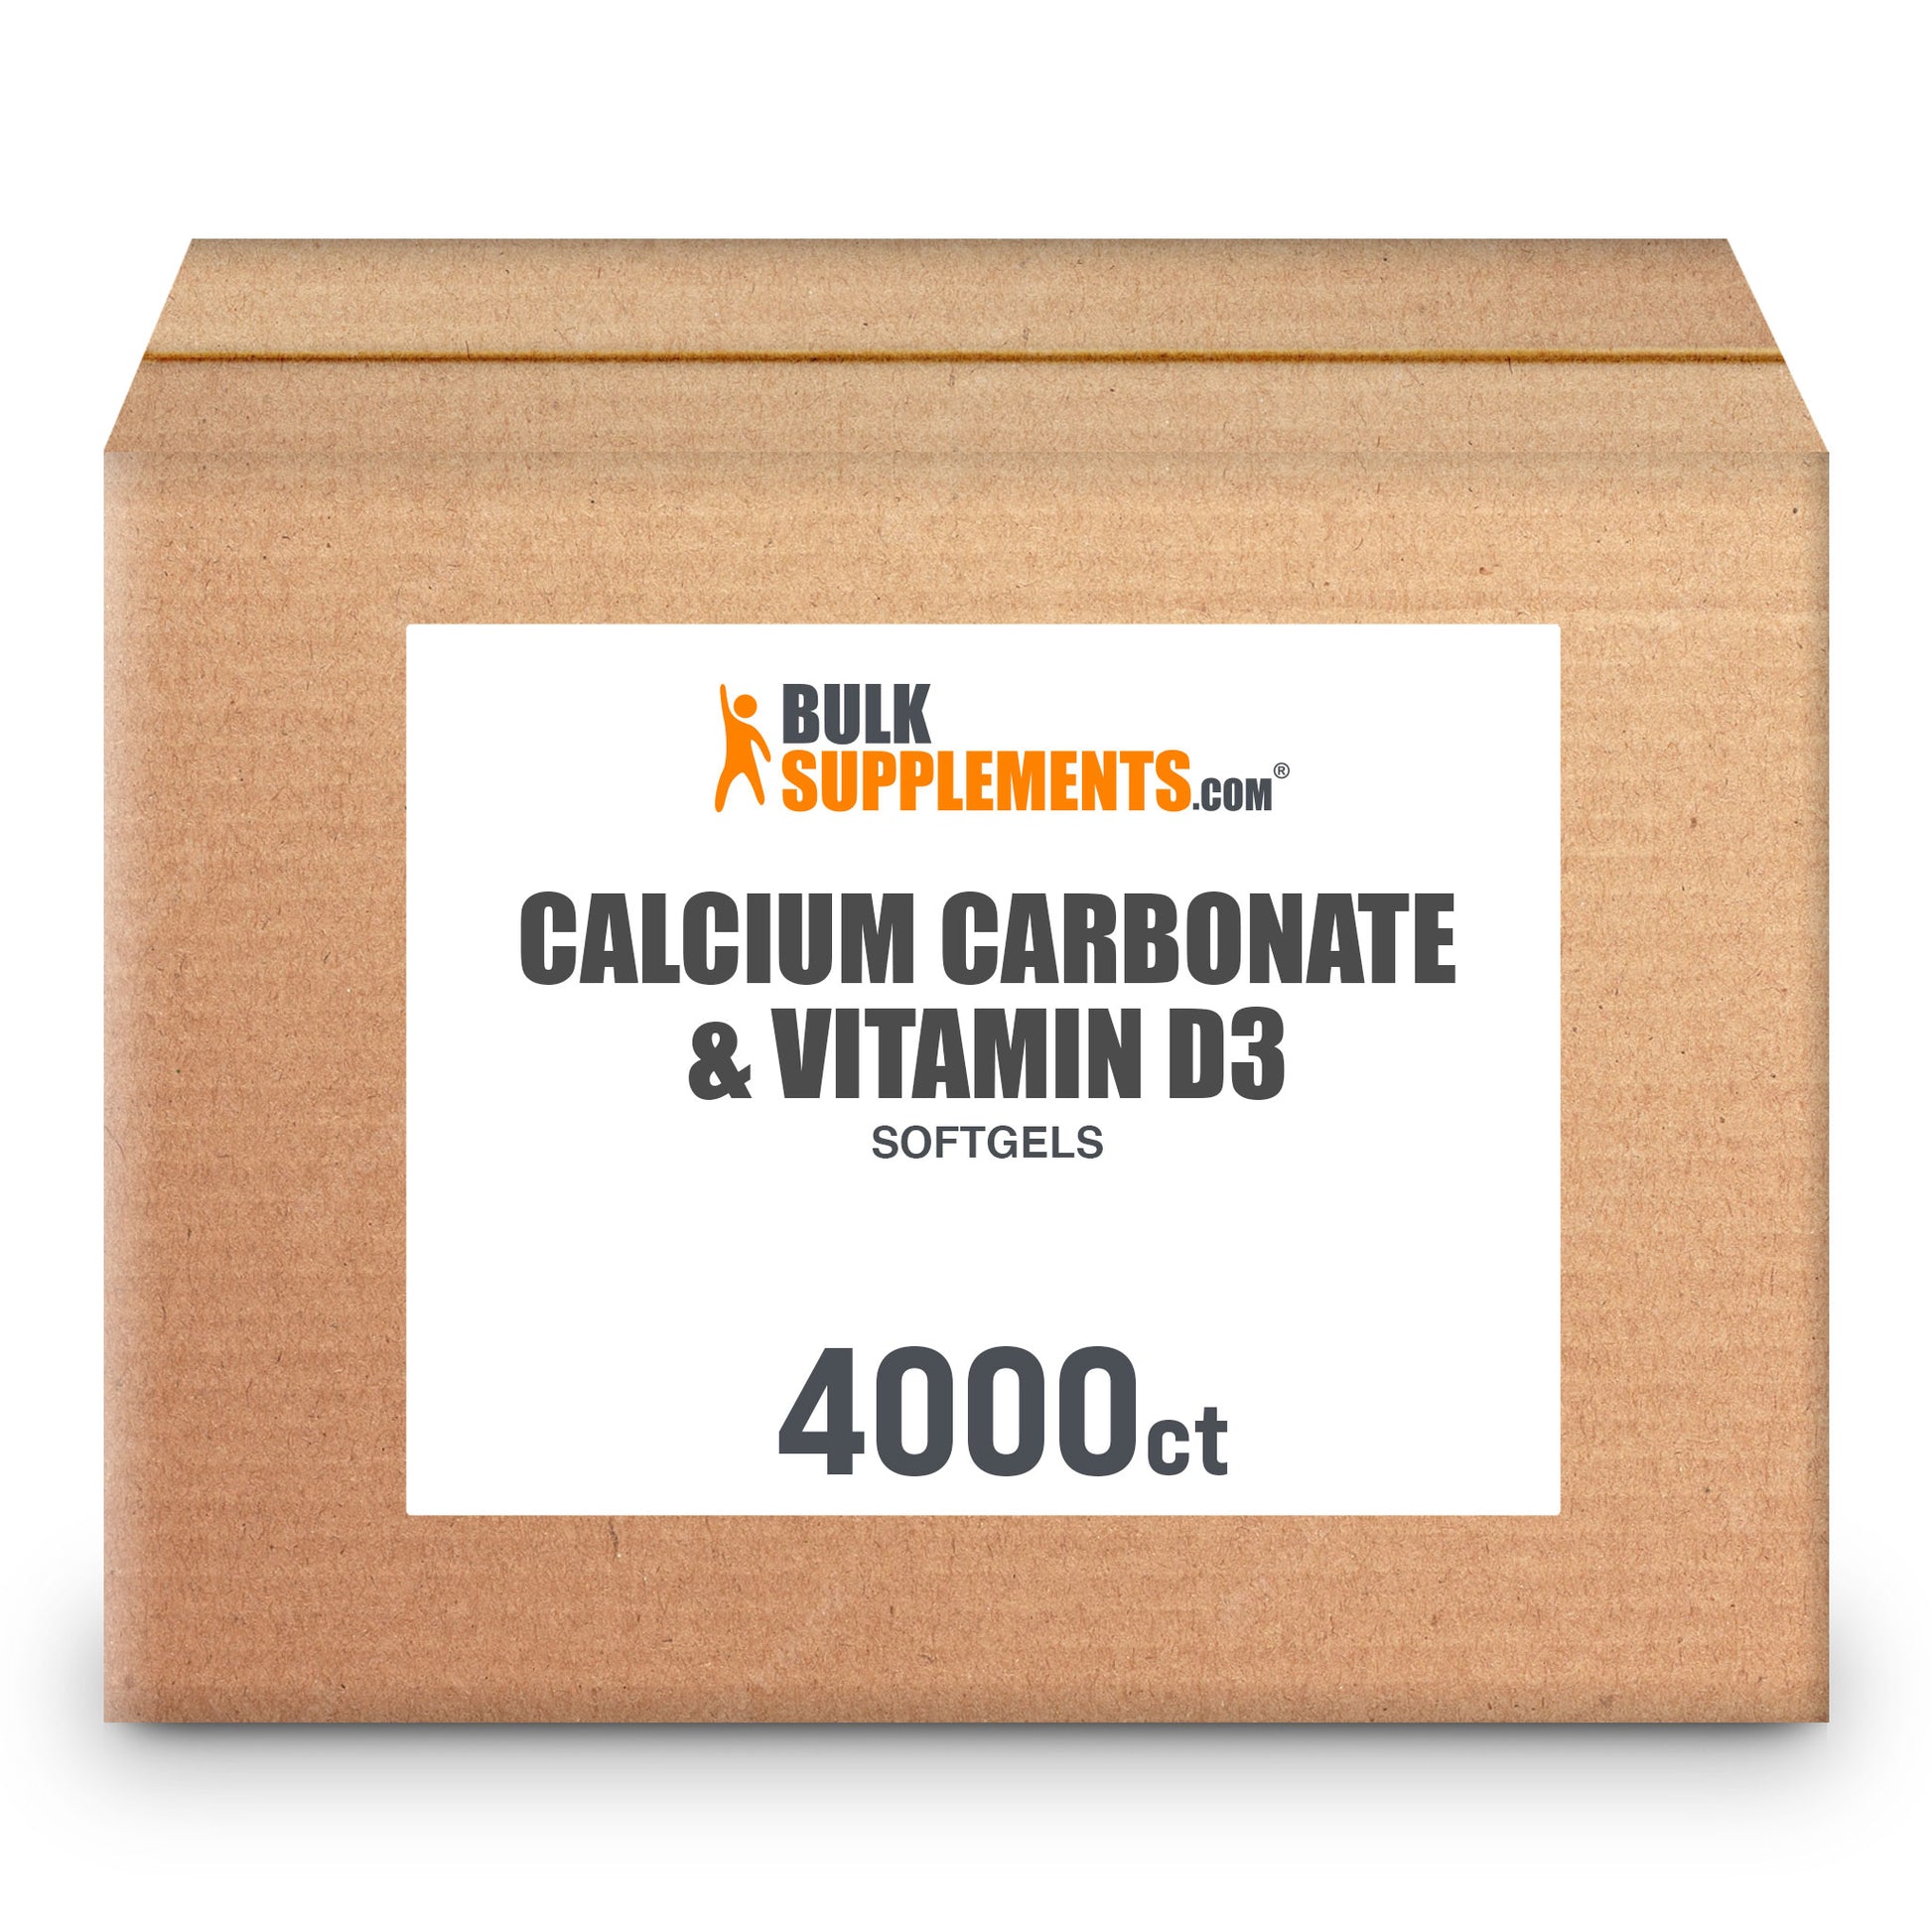 Calcium Carbonate & Vitamin D3 Softgels 4000 ct box